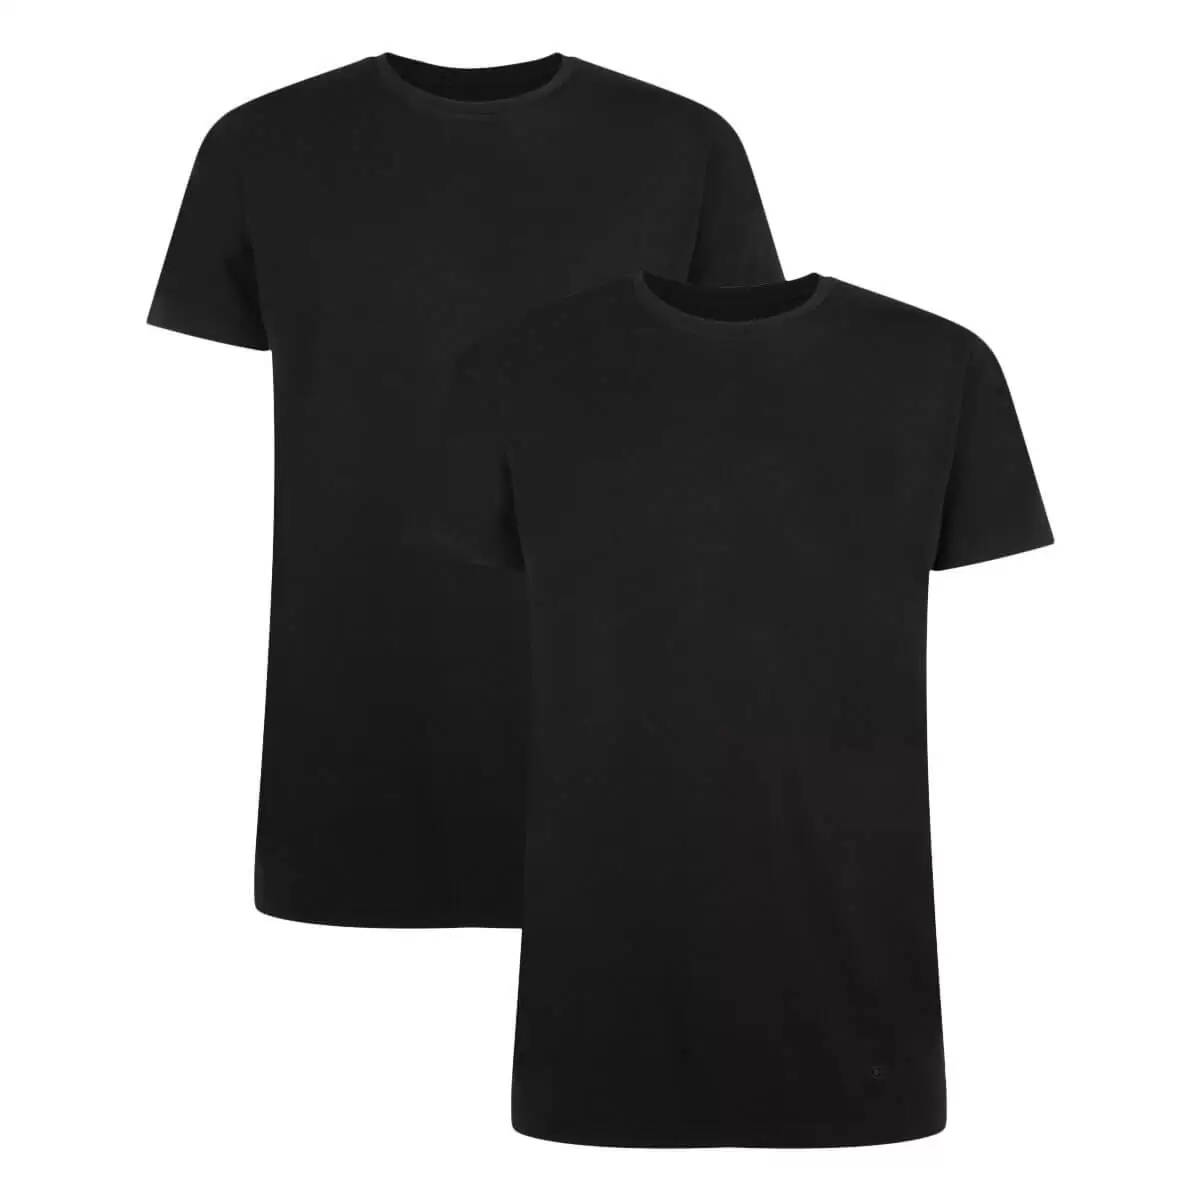 Schat Bewonderenswaardig walgelijk Bamboo Basics T-Shirt Ruben (2-pack) Zwart Extra lang